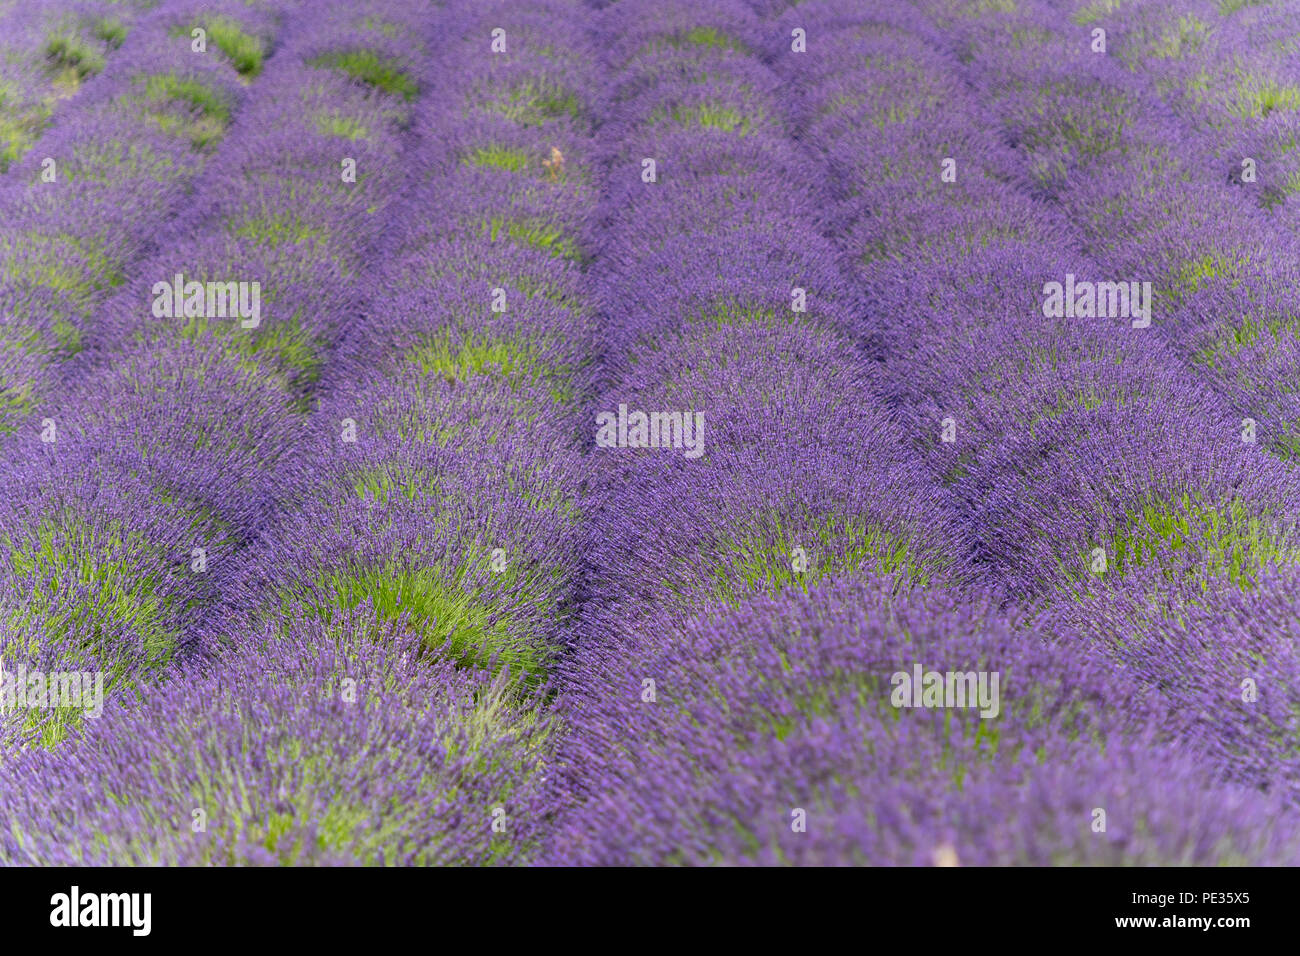 Lavendel Felder in voller Blüte, Snowshill, Cotswold, UK. Stockfoto